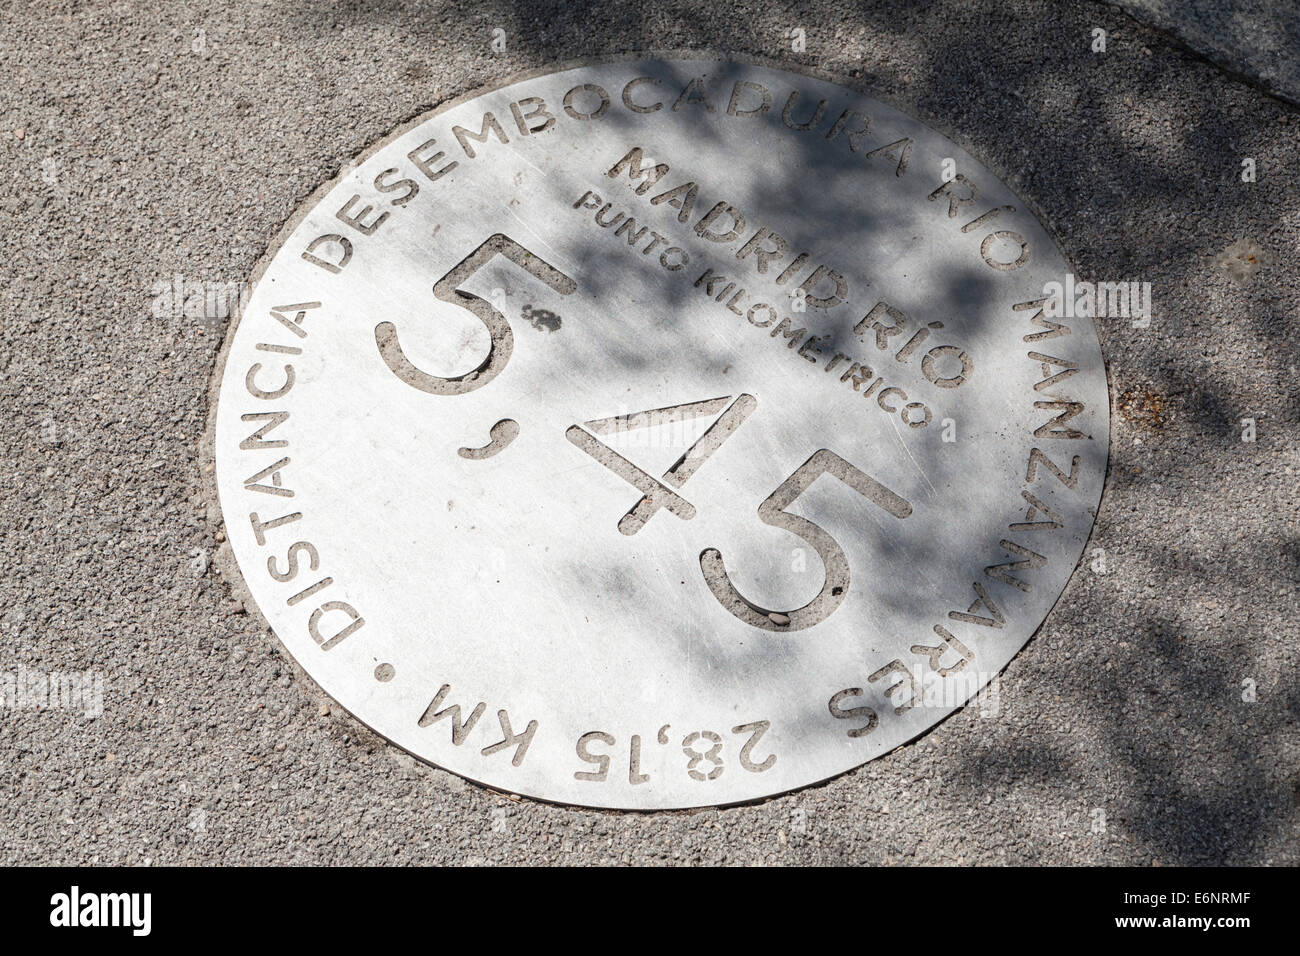 Steel plaque showing 5.45 kilometre distance location in Madrid Rio park, Madrid, Spain. Stock Photo